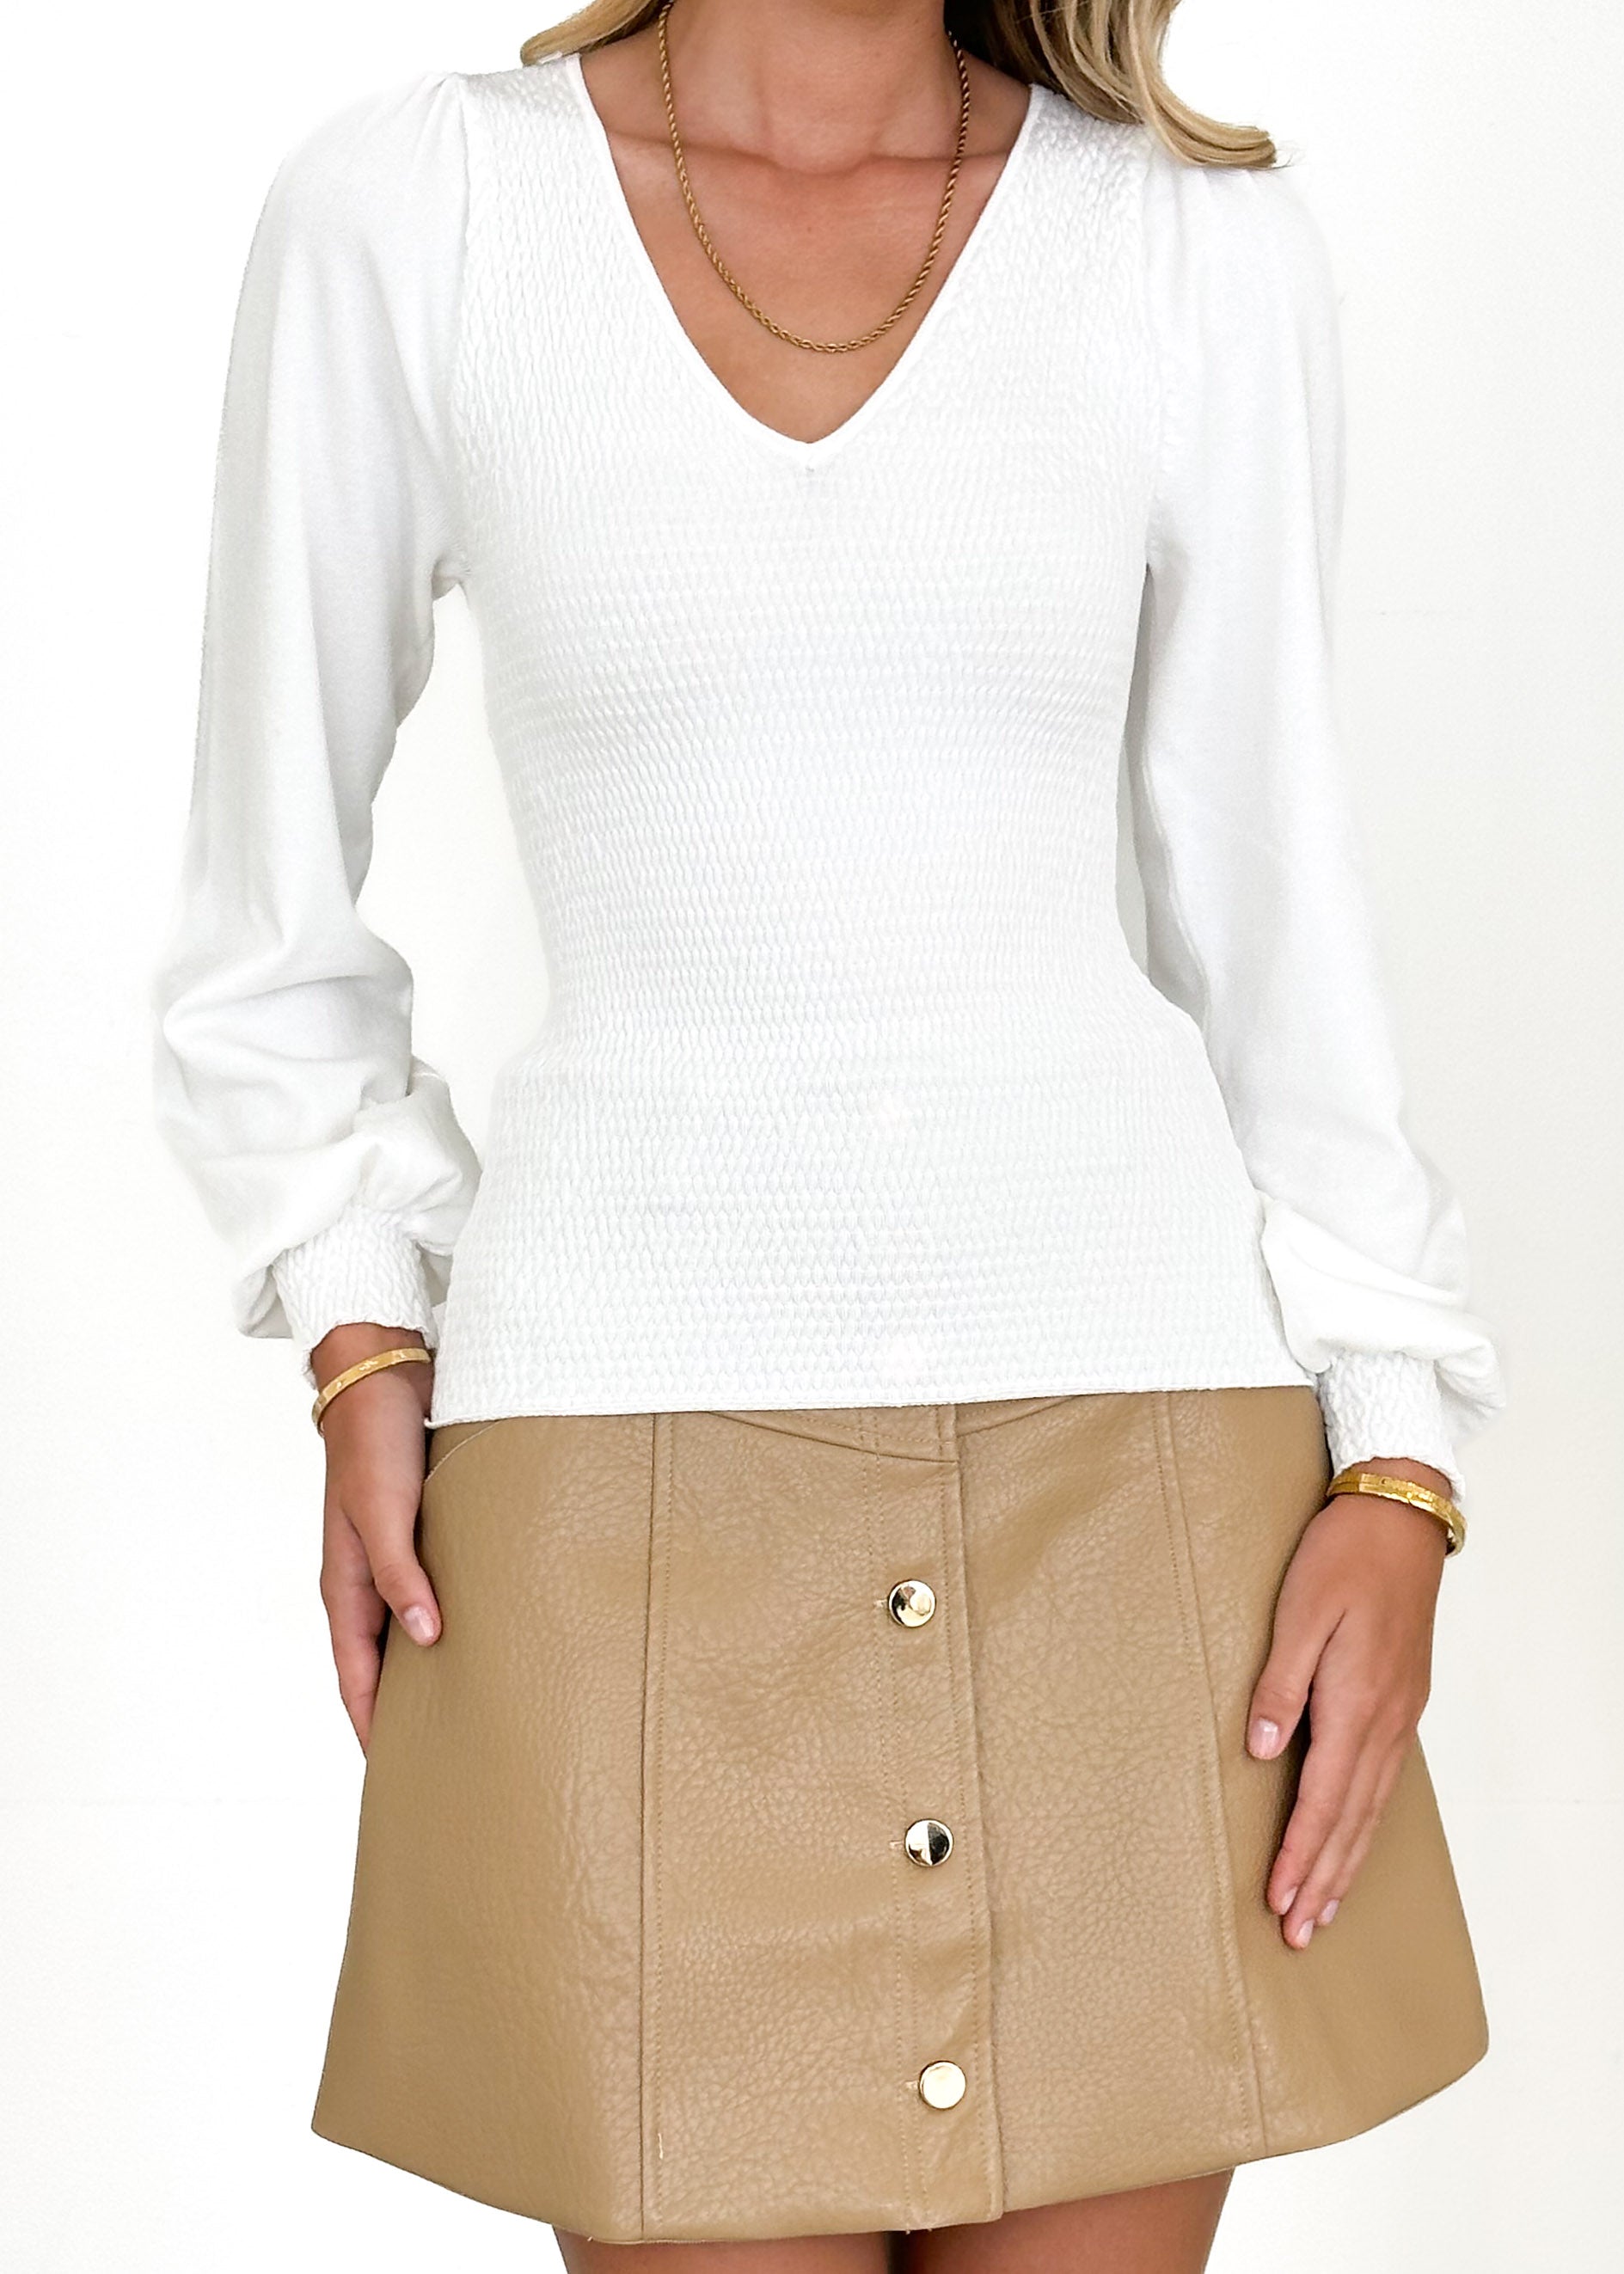 Delvie Knit Top - Off White